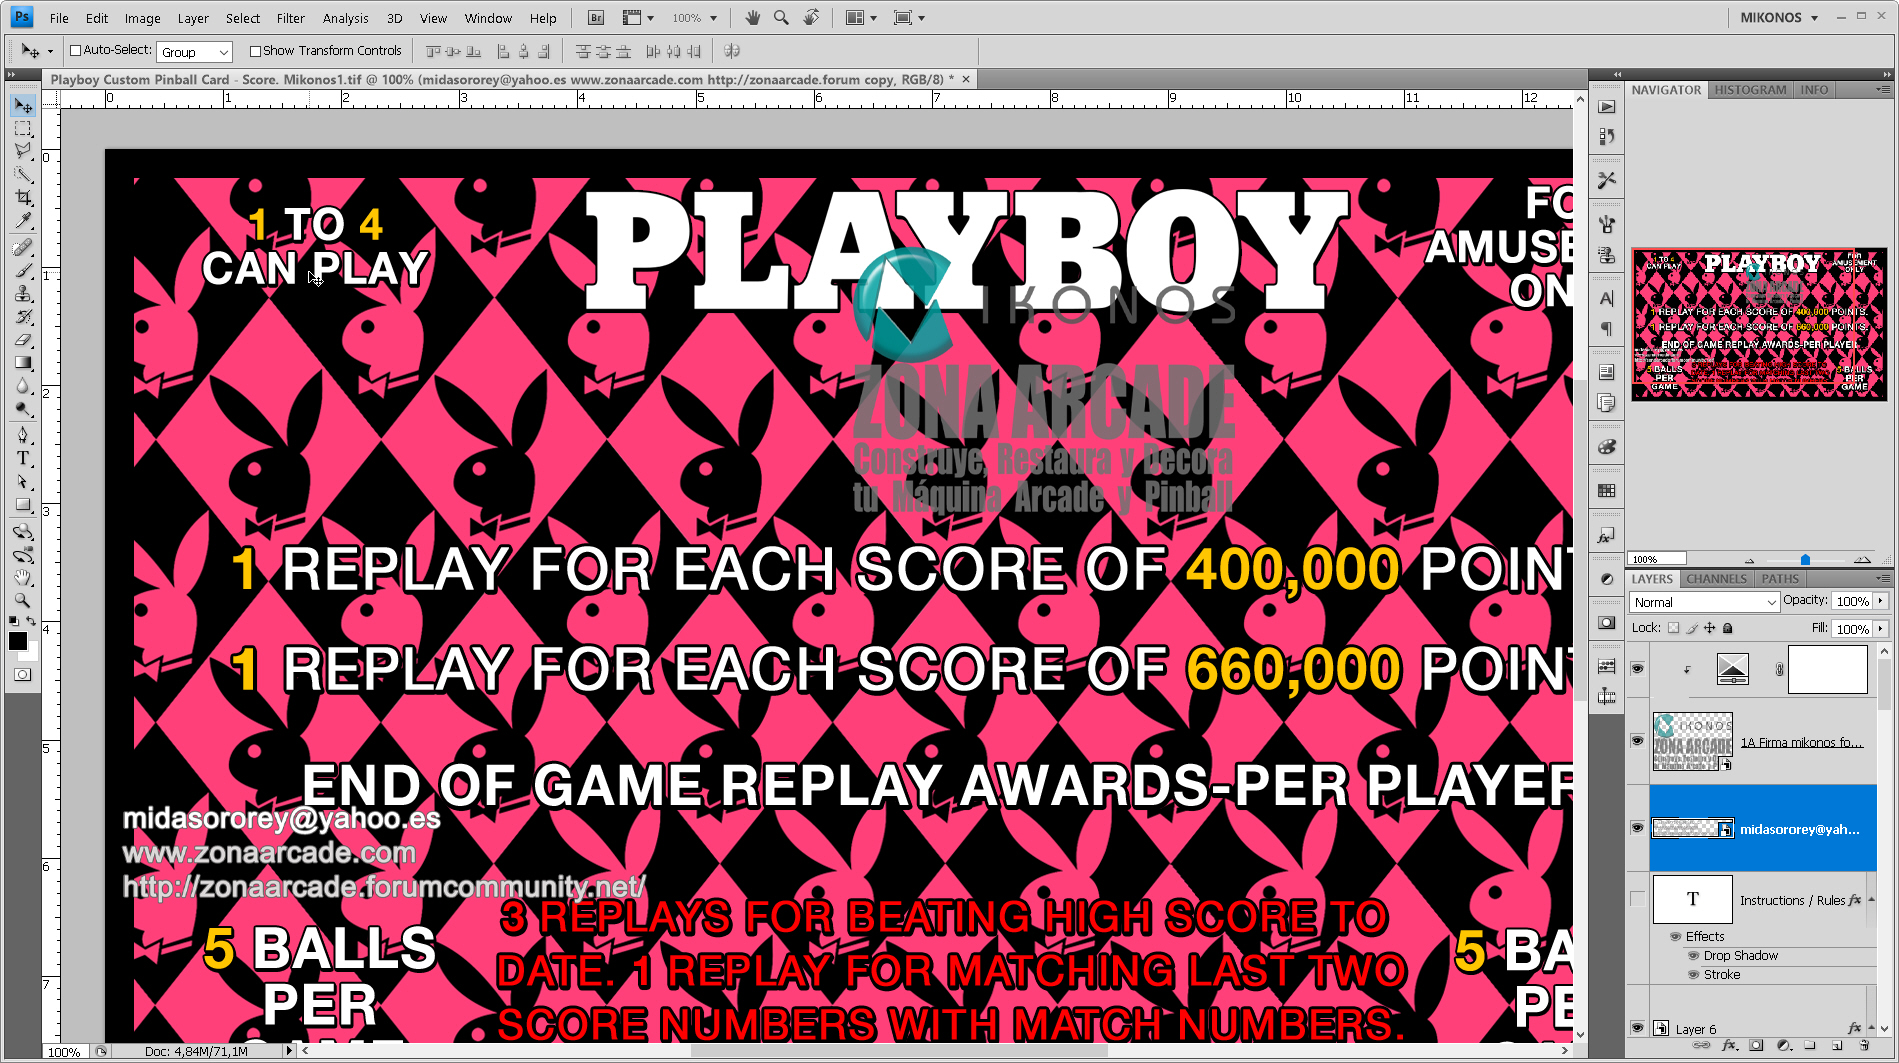 Playboy Custom Pinball Card - Score. Mikonos2